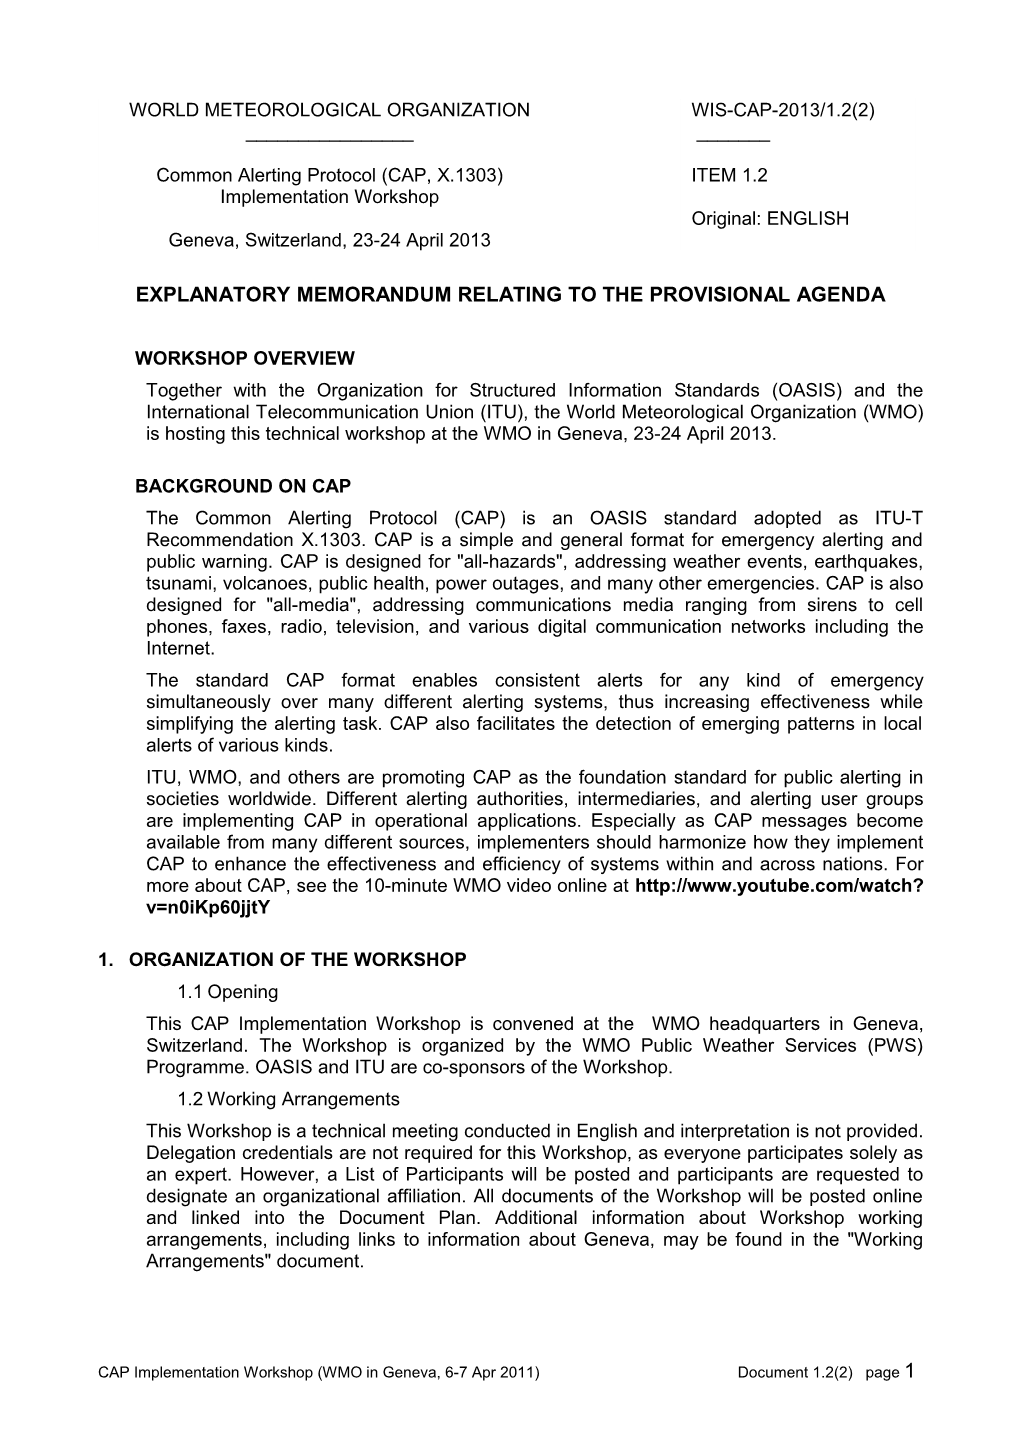 Explanatory Memorandum Relating to the Provisional Agenda